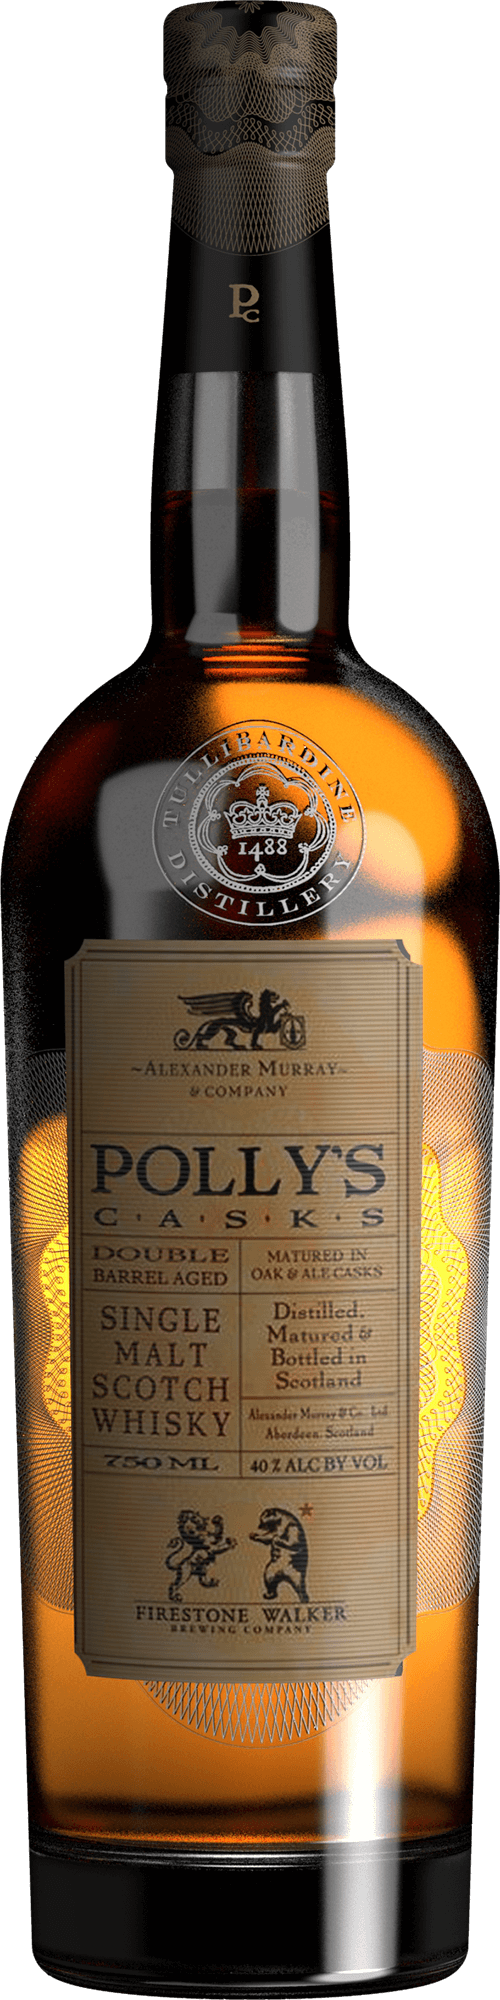 Alexander Murray & Co. Polly's Casks Single Malt Scotch Whisky